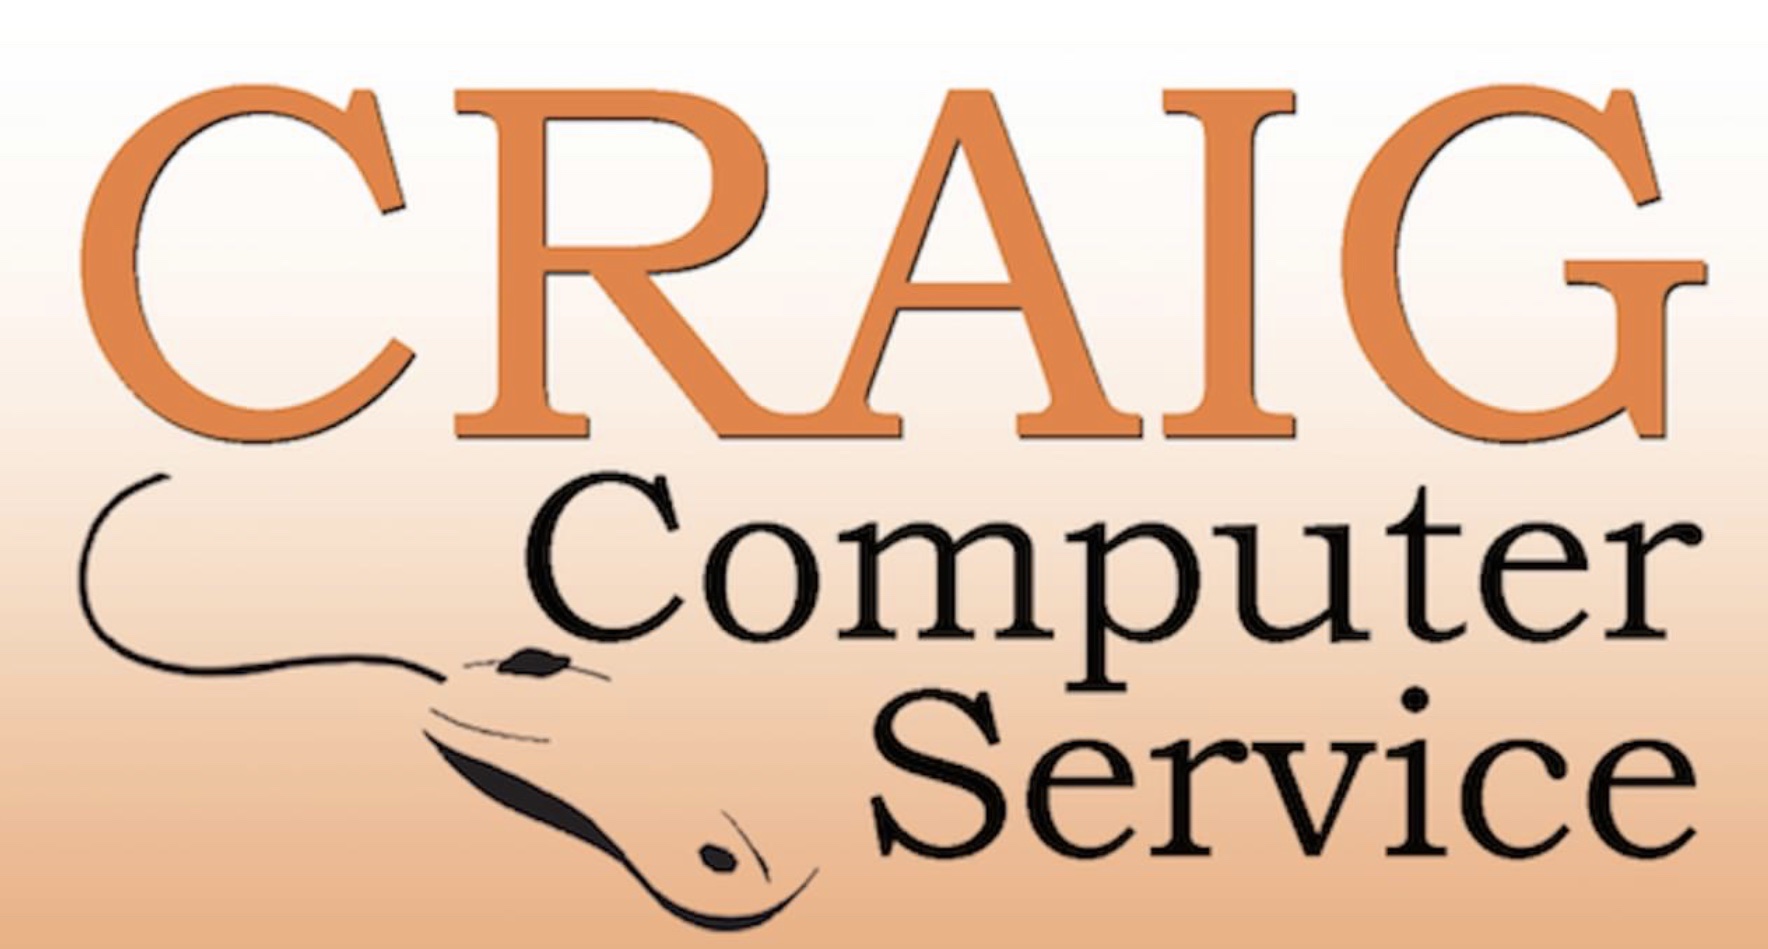 CRAIG Computer Service